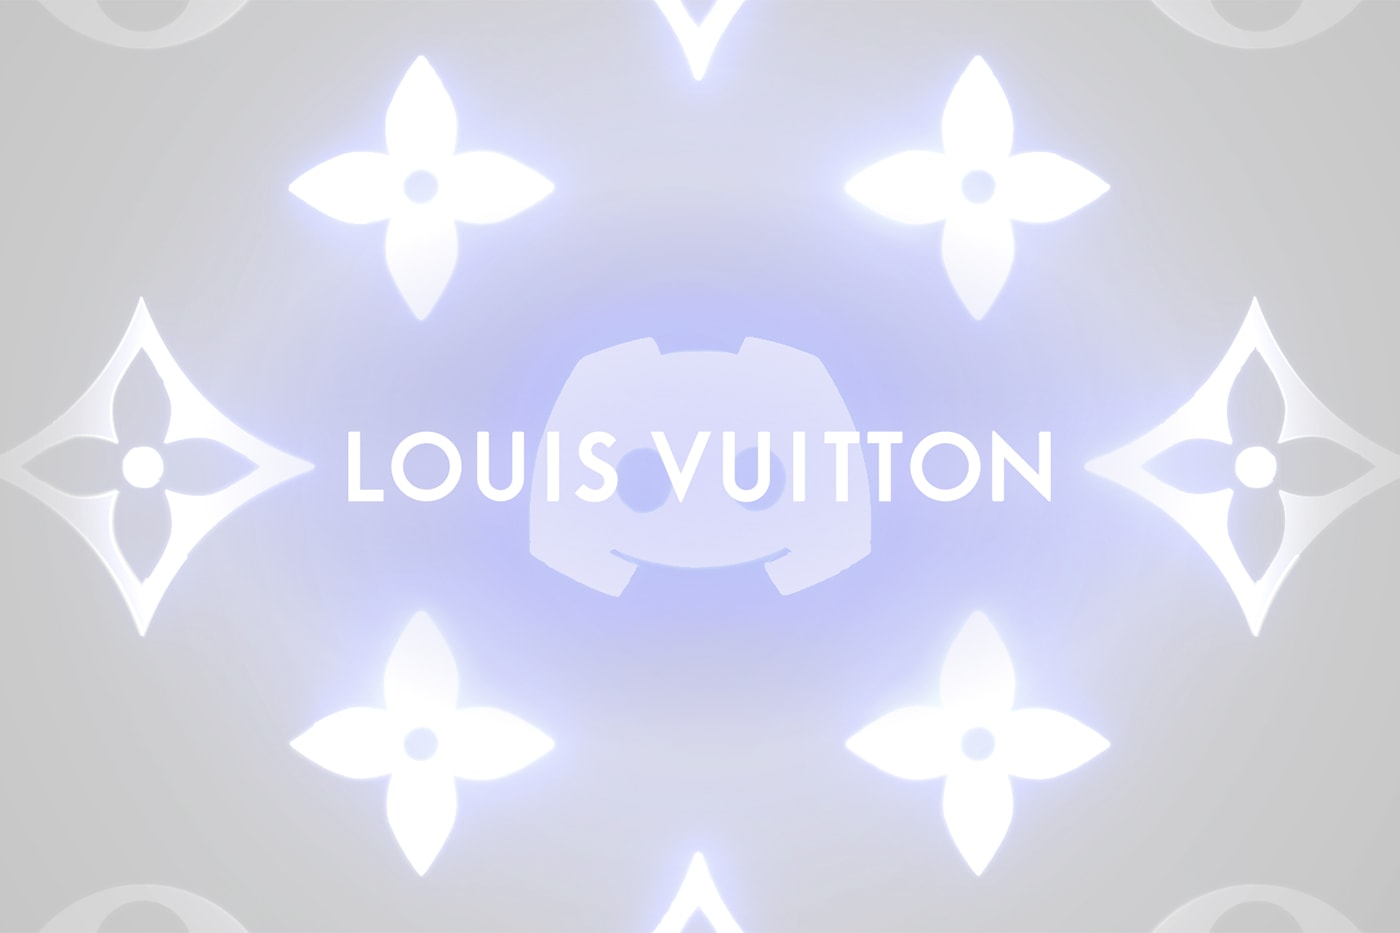 Louis Vuitton Announces Its Presence on Discord